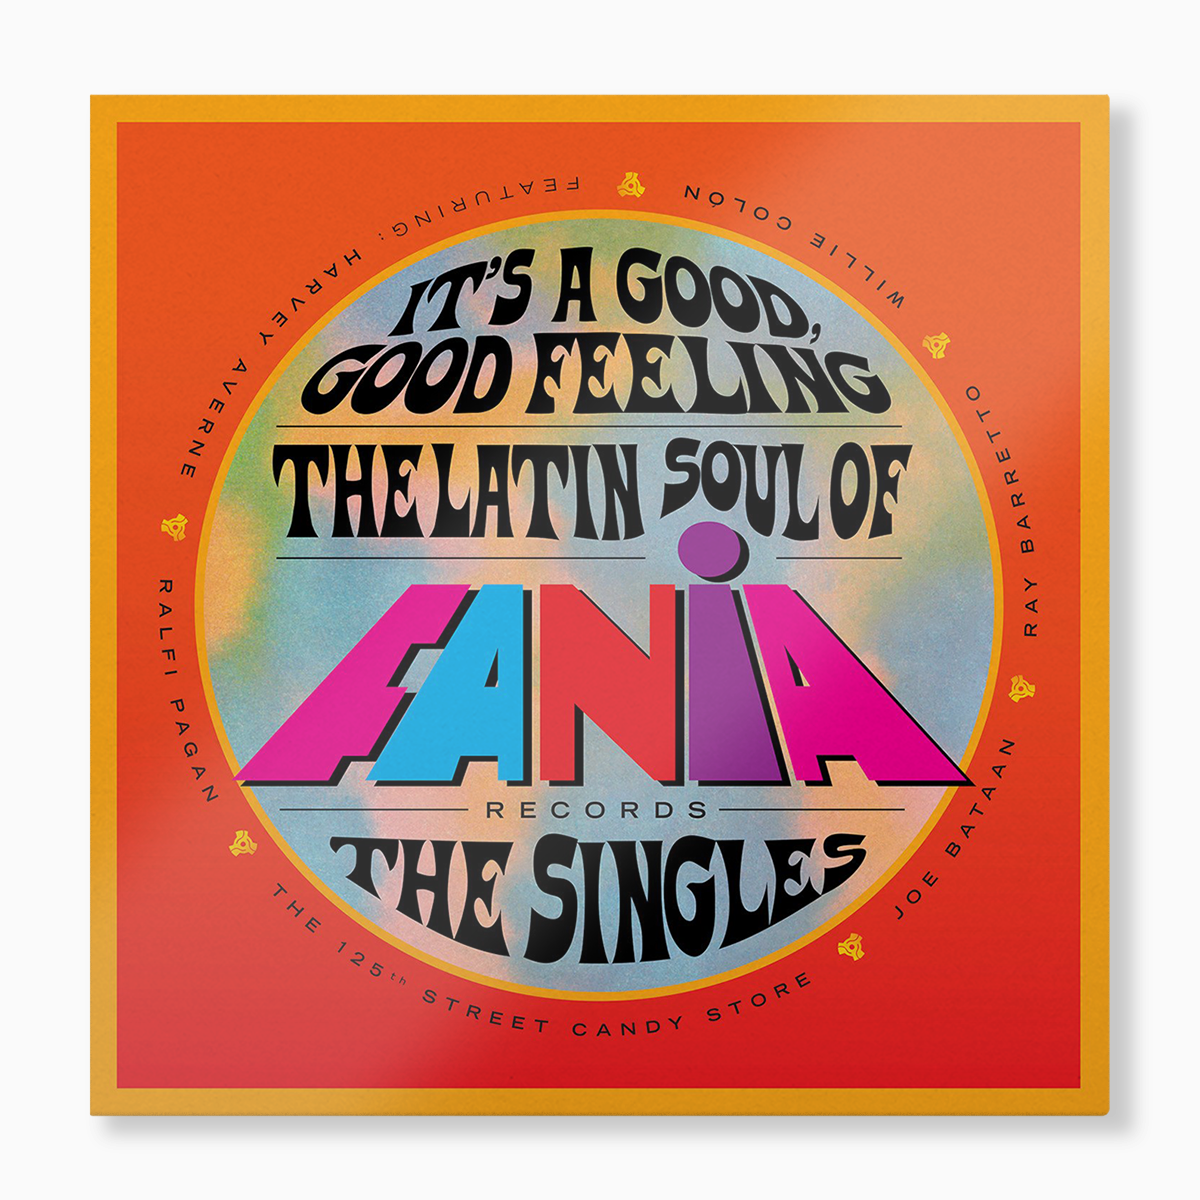 It's a Good, Good Feeling: The Latin Soul of Fania Records (Digital Album)